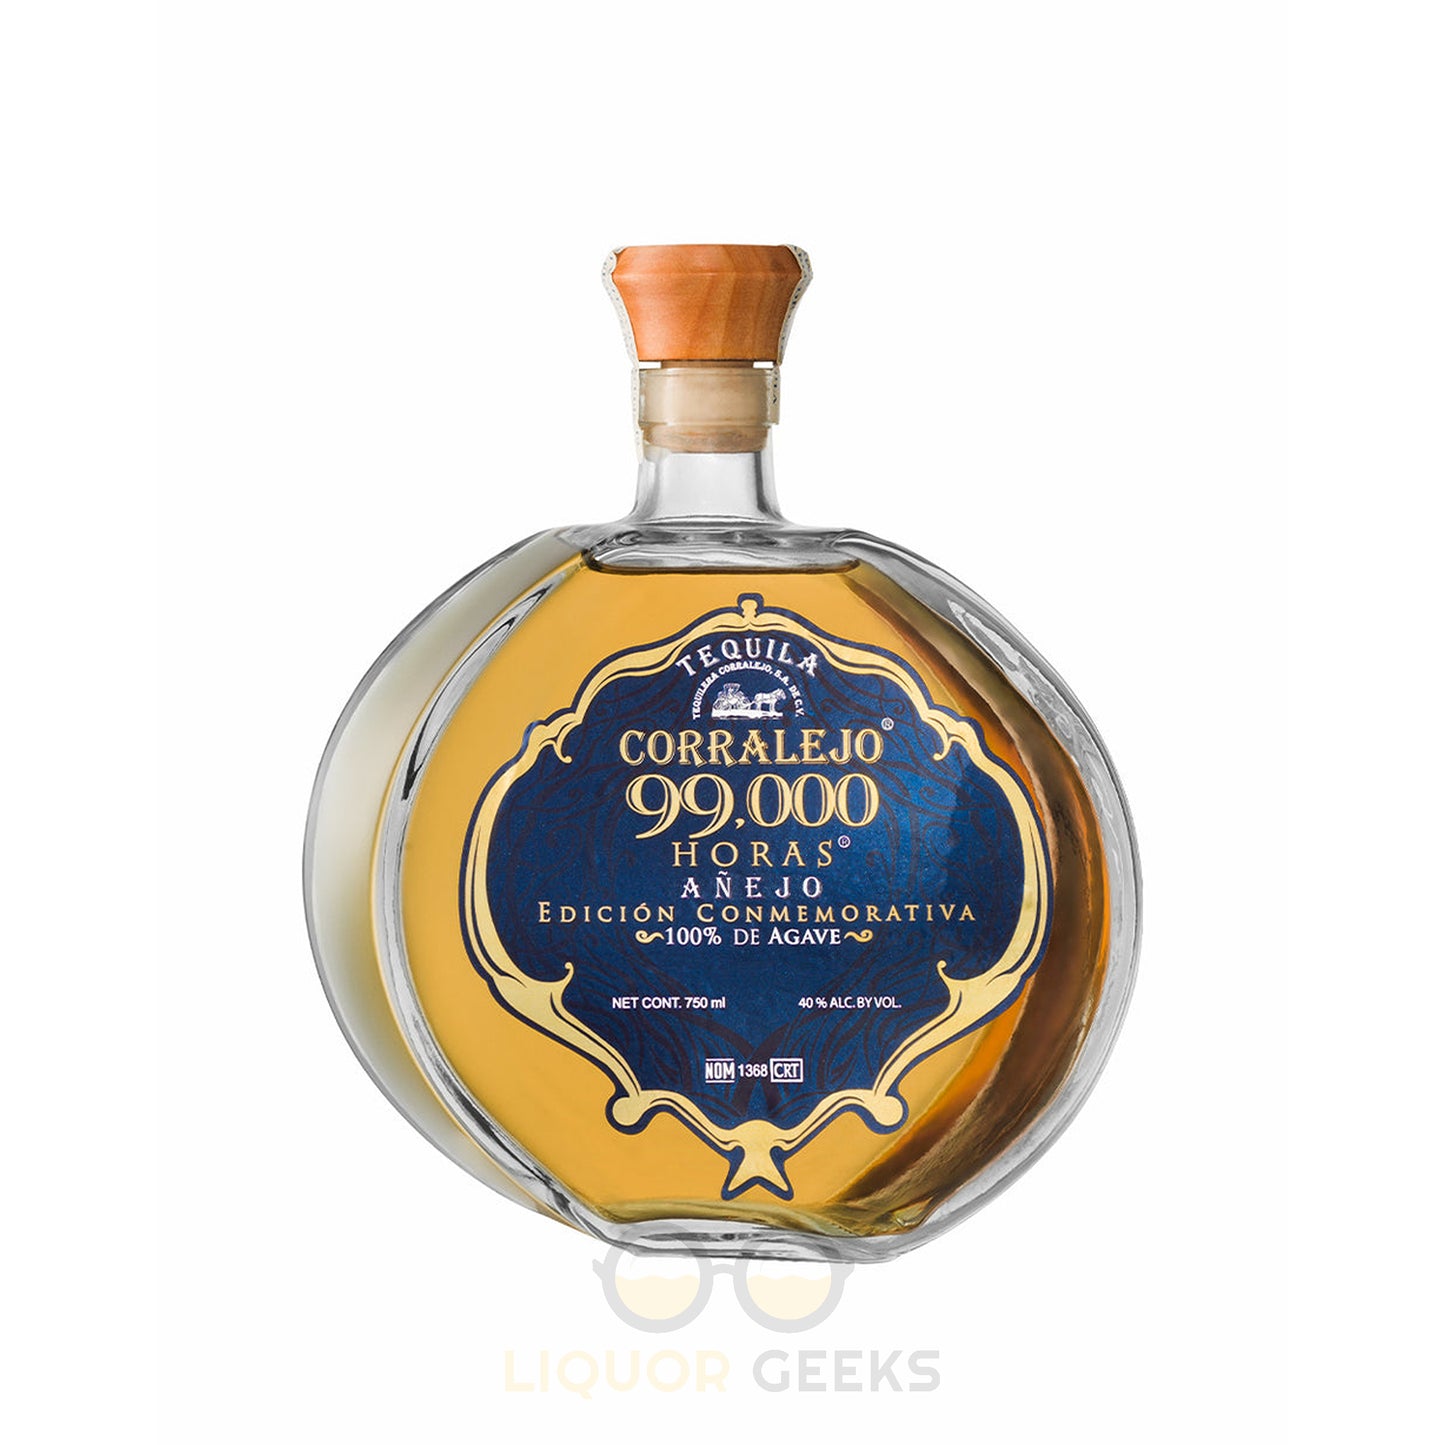 Liquor Horas Tequila Geeks – Anejo Corralejo 99,000